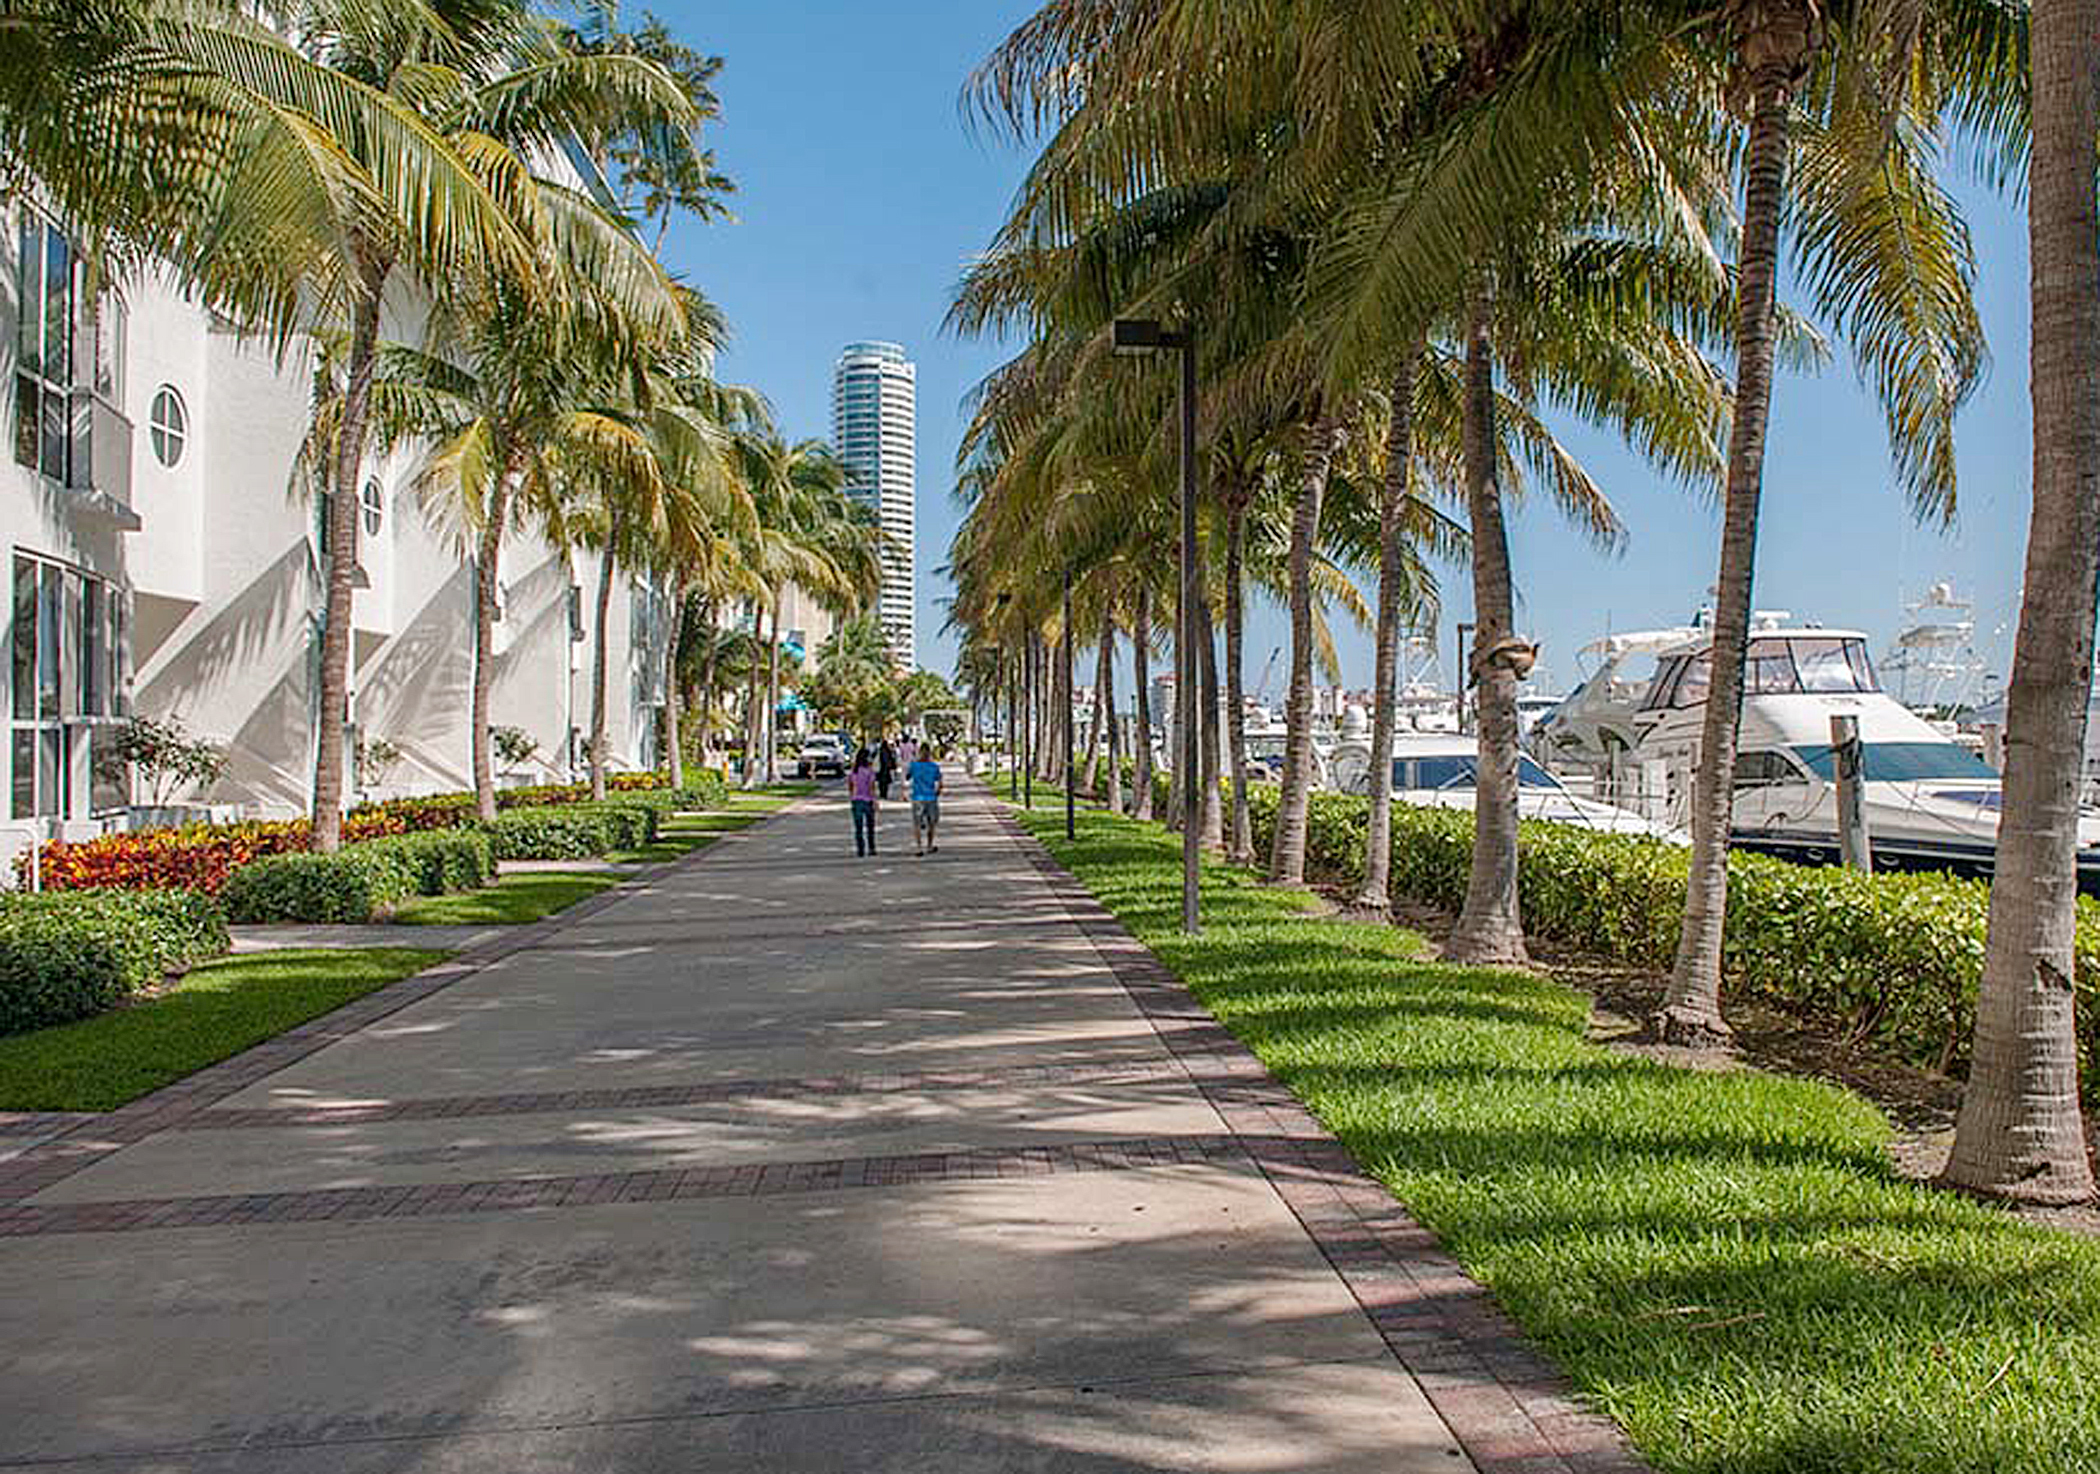 6. Miami Beach, Fla.
                            Population: 91,458 | Percent Who Primarily Walk/Bike: 18%